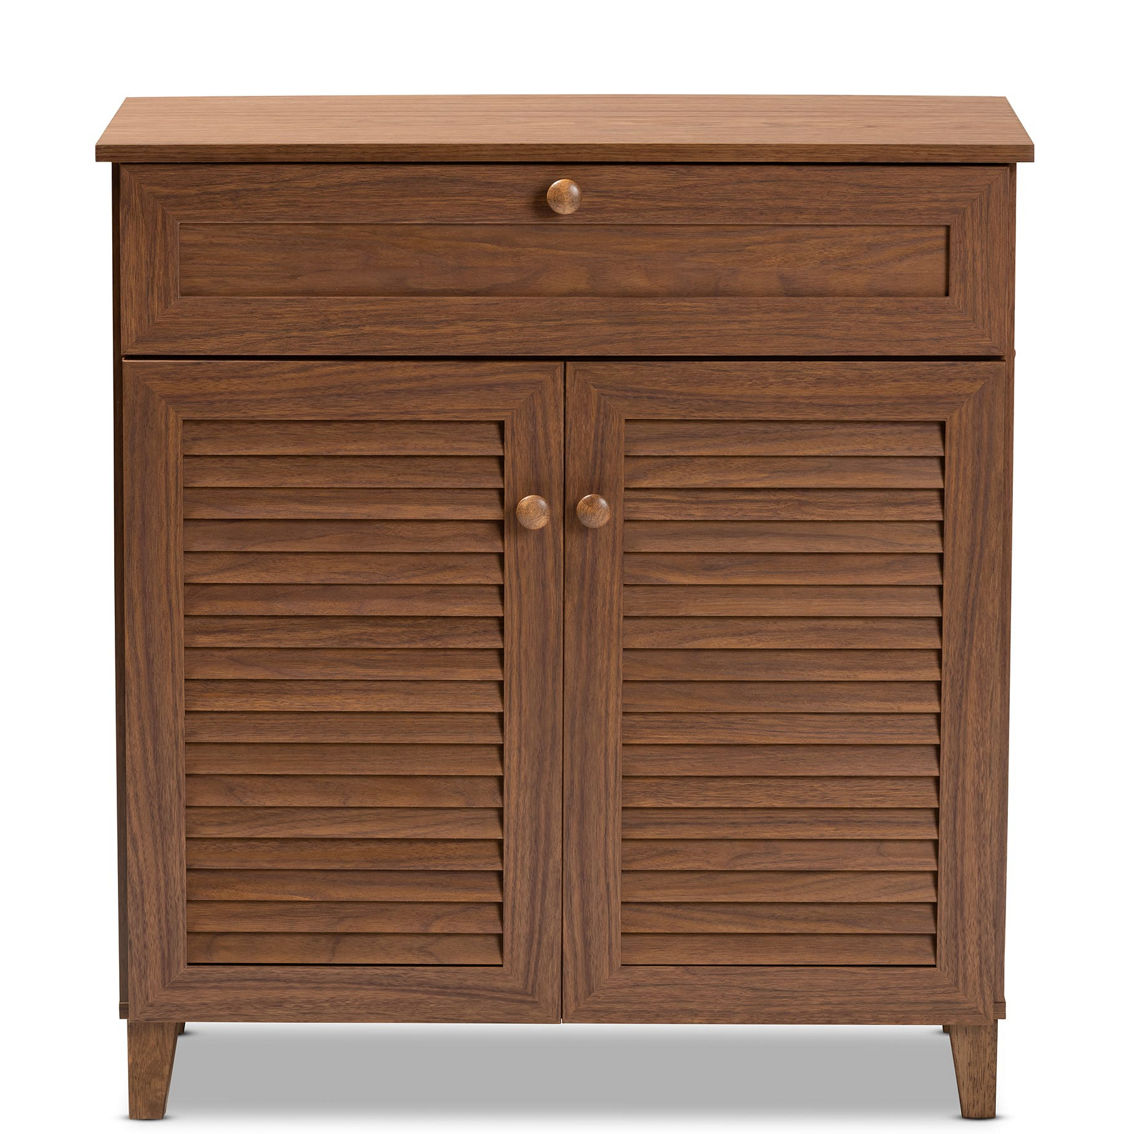 Baxton Studio Coolidge Walnut 4-Shelf Shoe Storage Cabinet with Drawer - Image 3 of 5